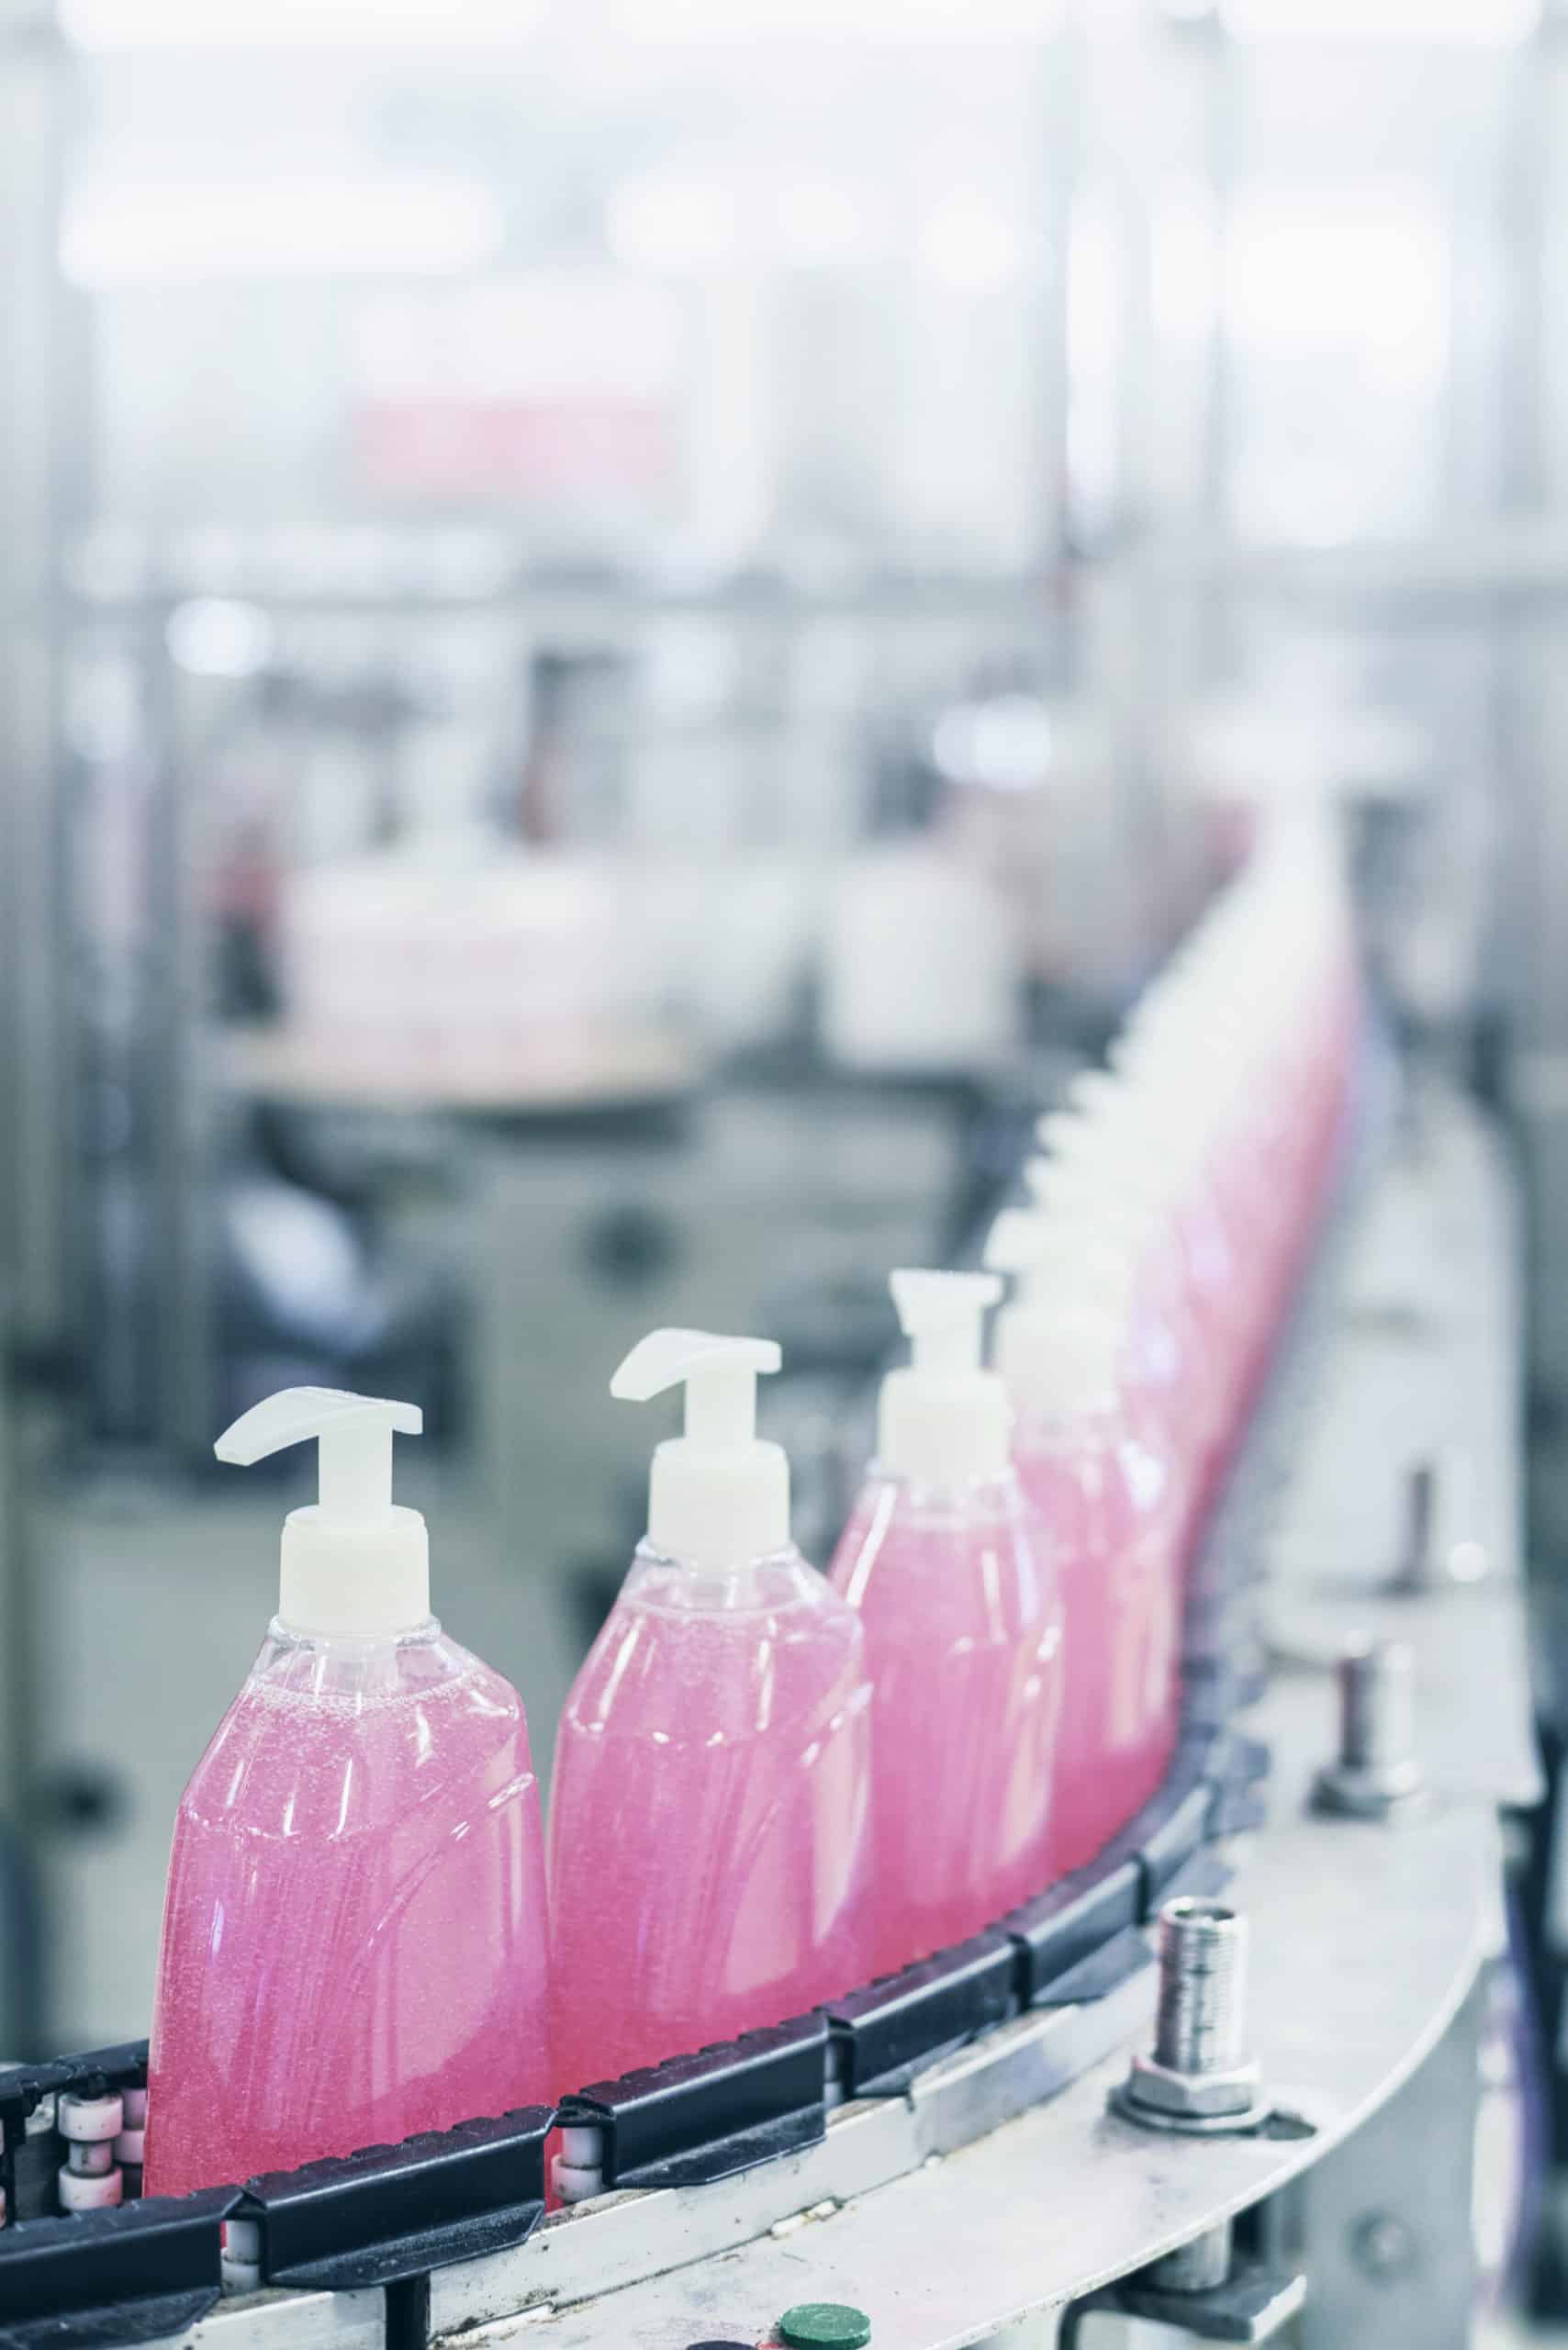 Bottles of soap on assembly line.